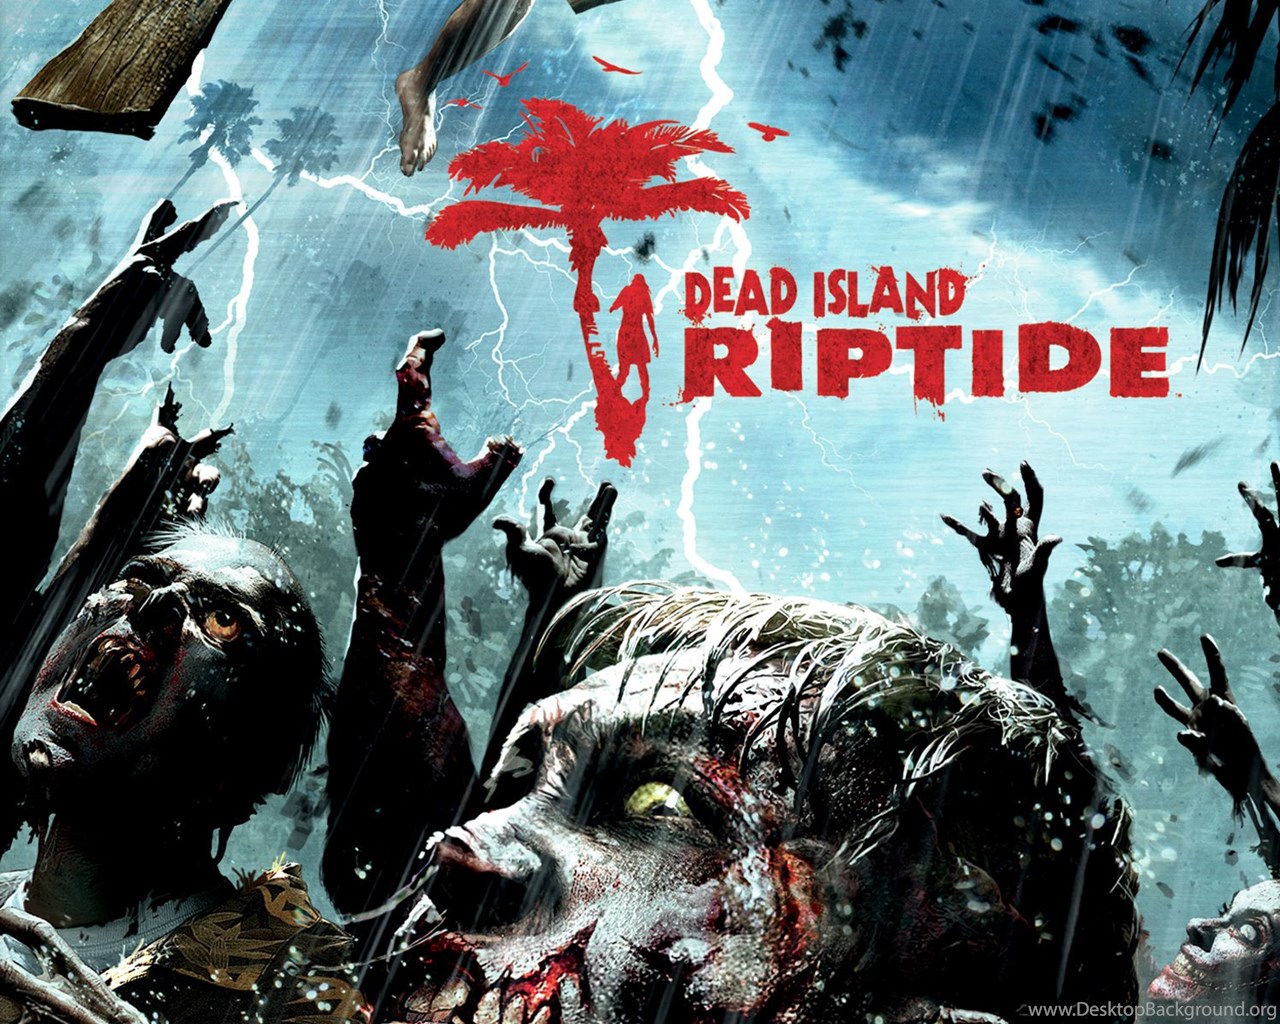 Dead island reptide. Деад Исланд риптайд остров. Dead Island Riptide 3 часть.